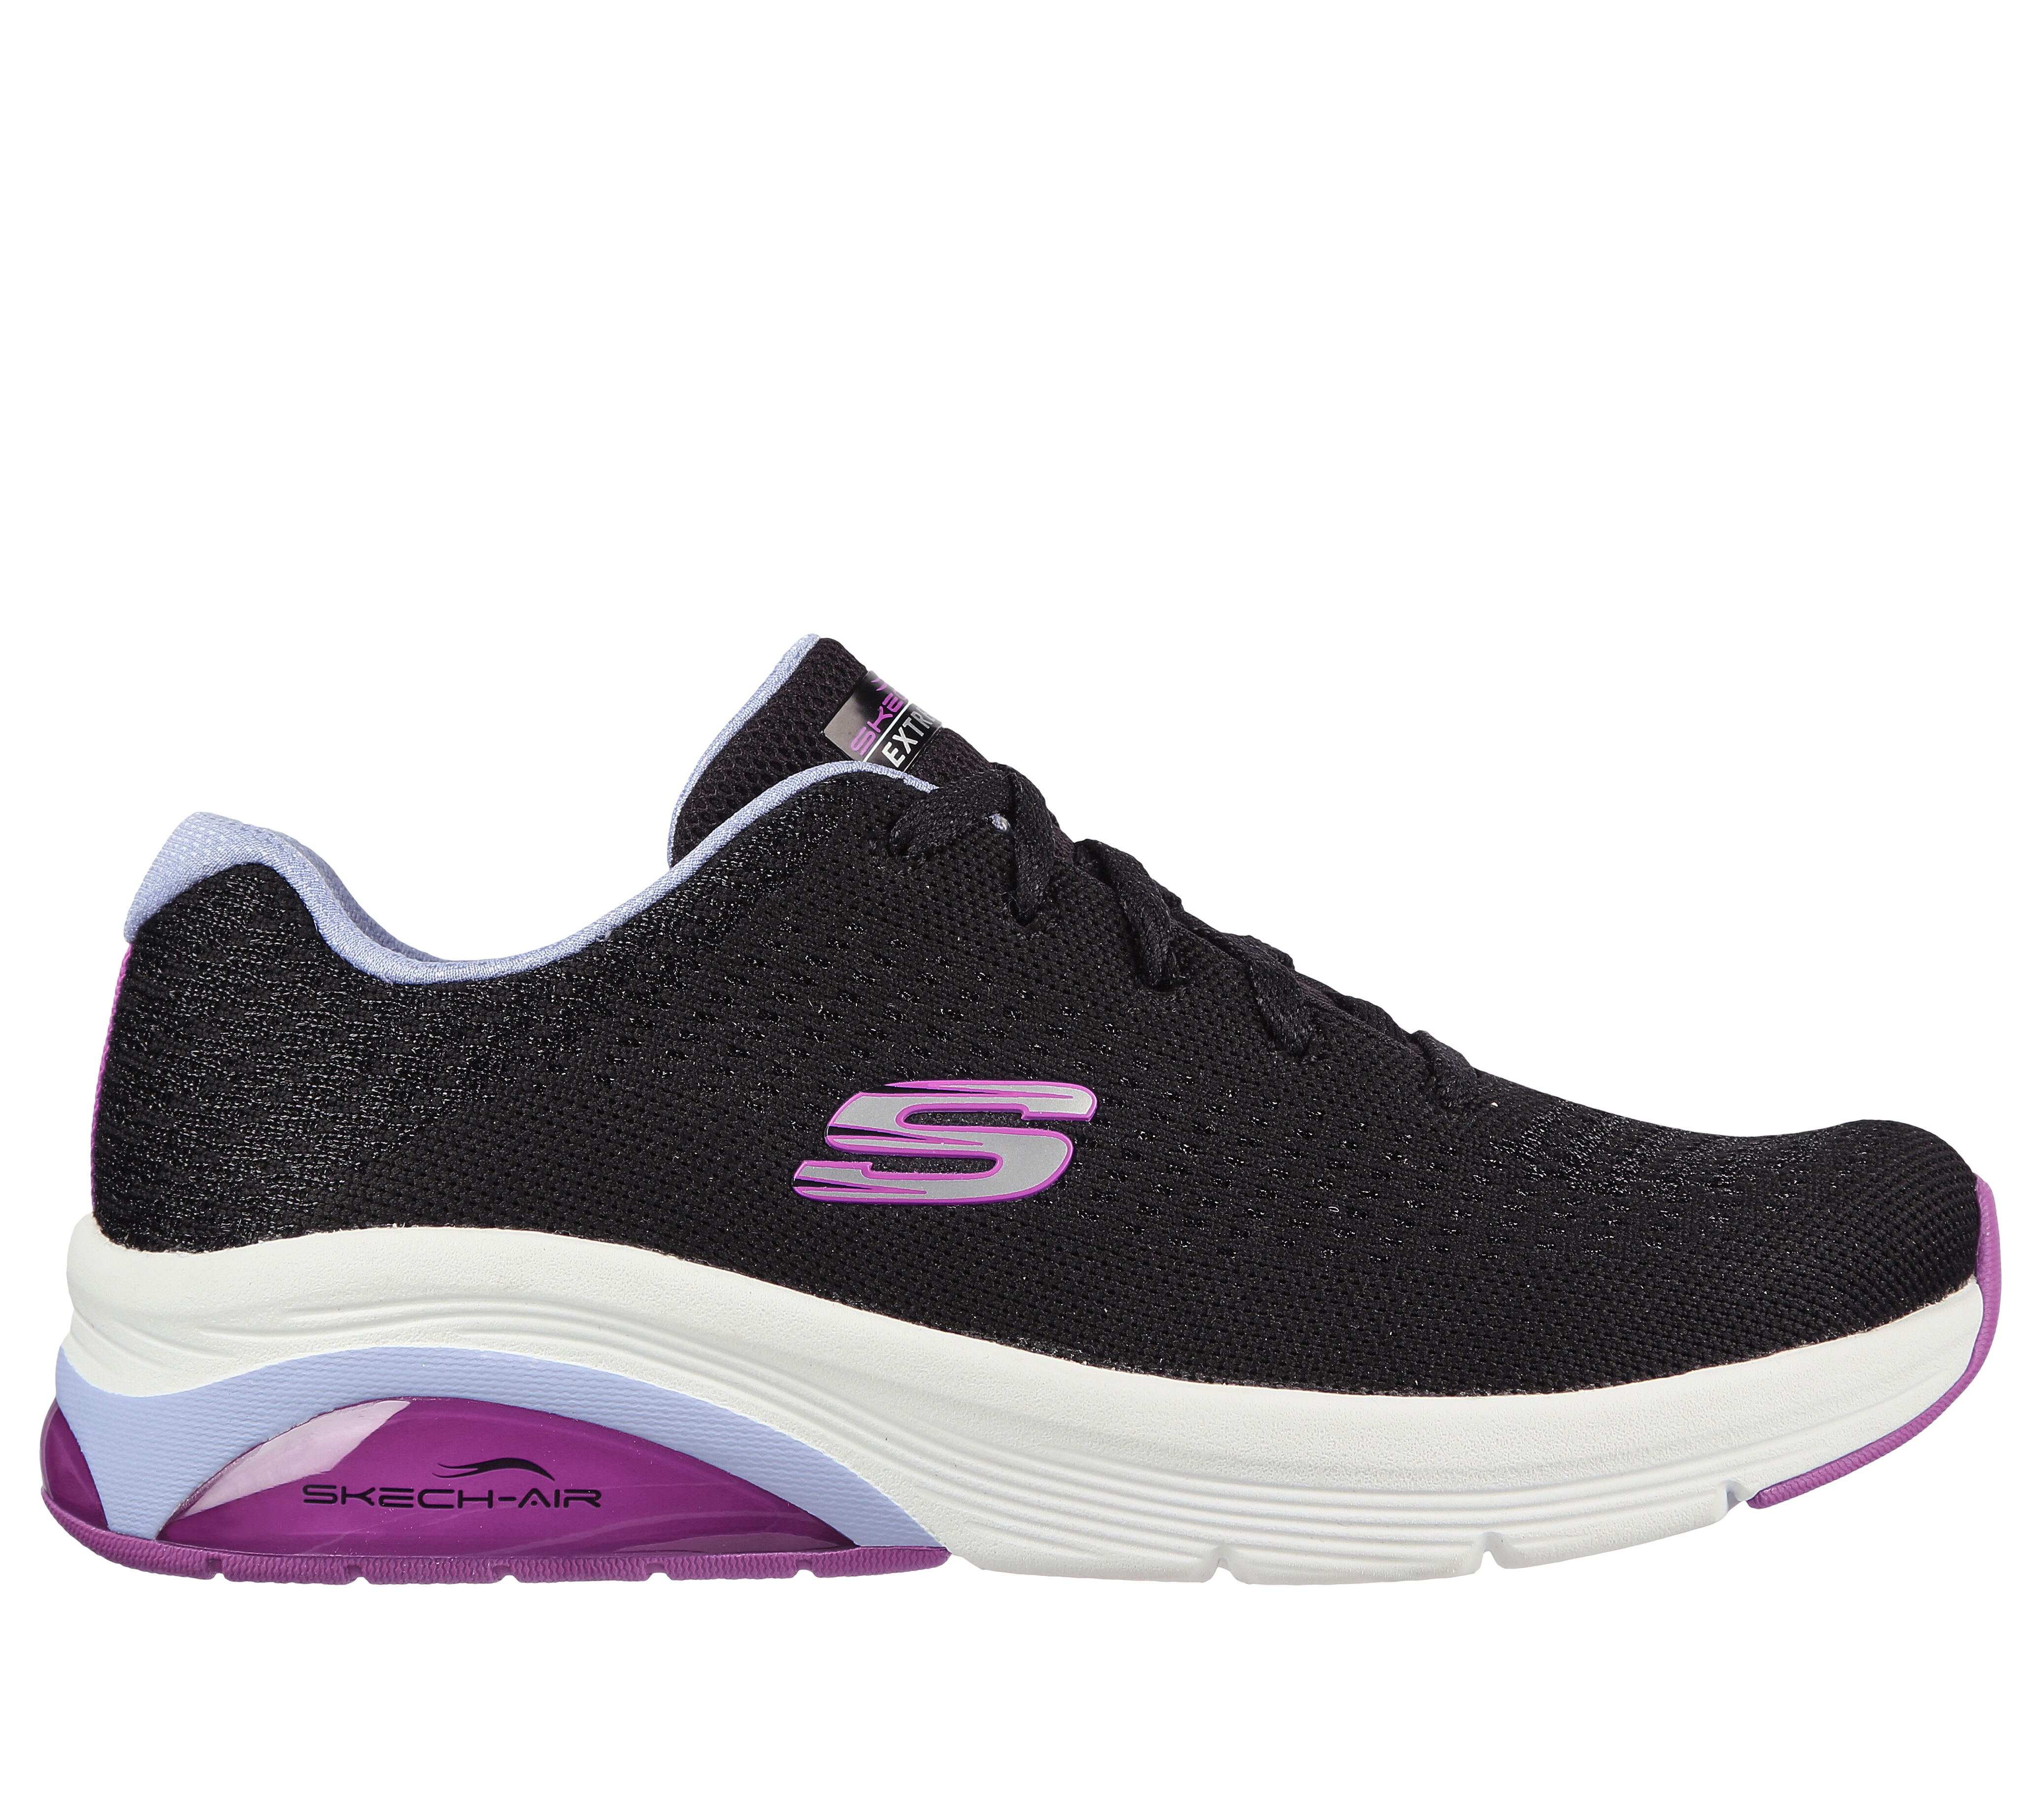 skechers women's skech air walking shoes